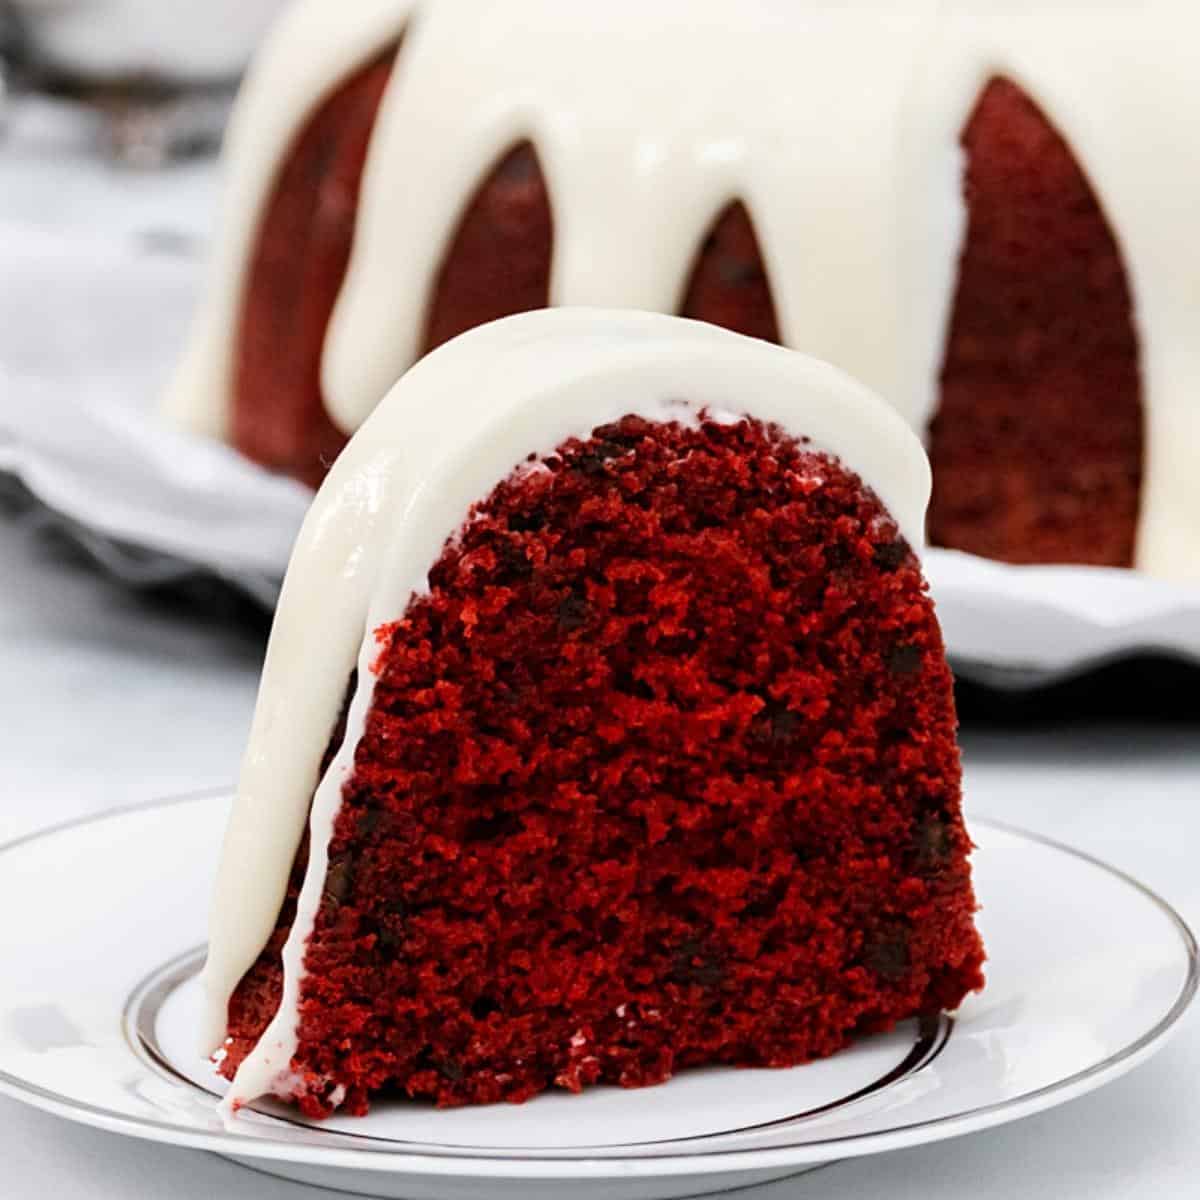 https://iscreamforbuttercream.com/wp-content/uploads/2022/01/red-velet-pound-cake-featured-image.jpg